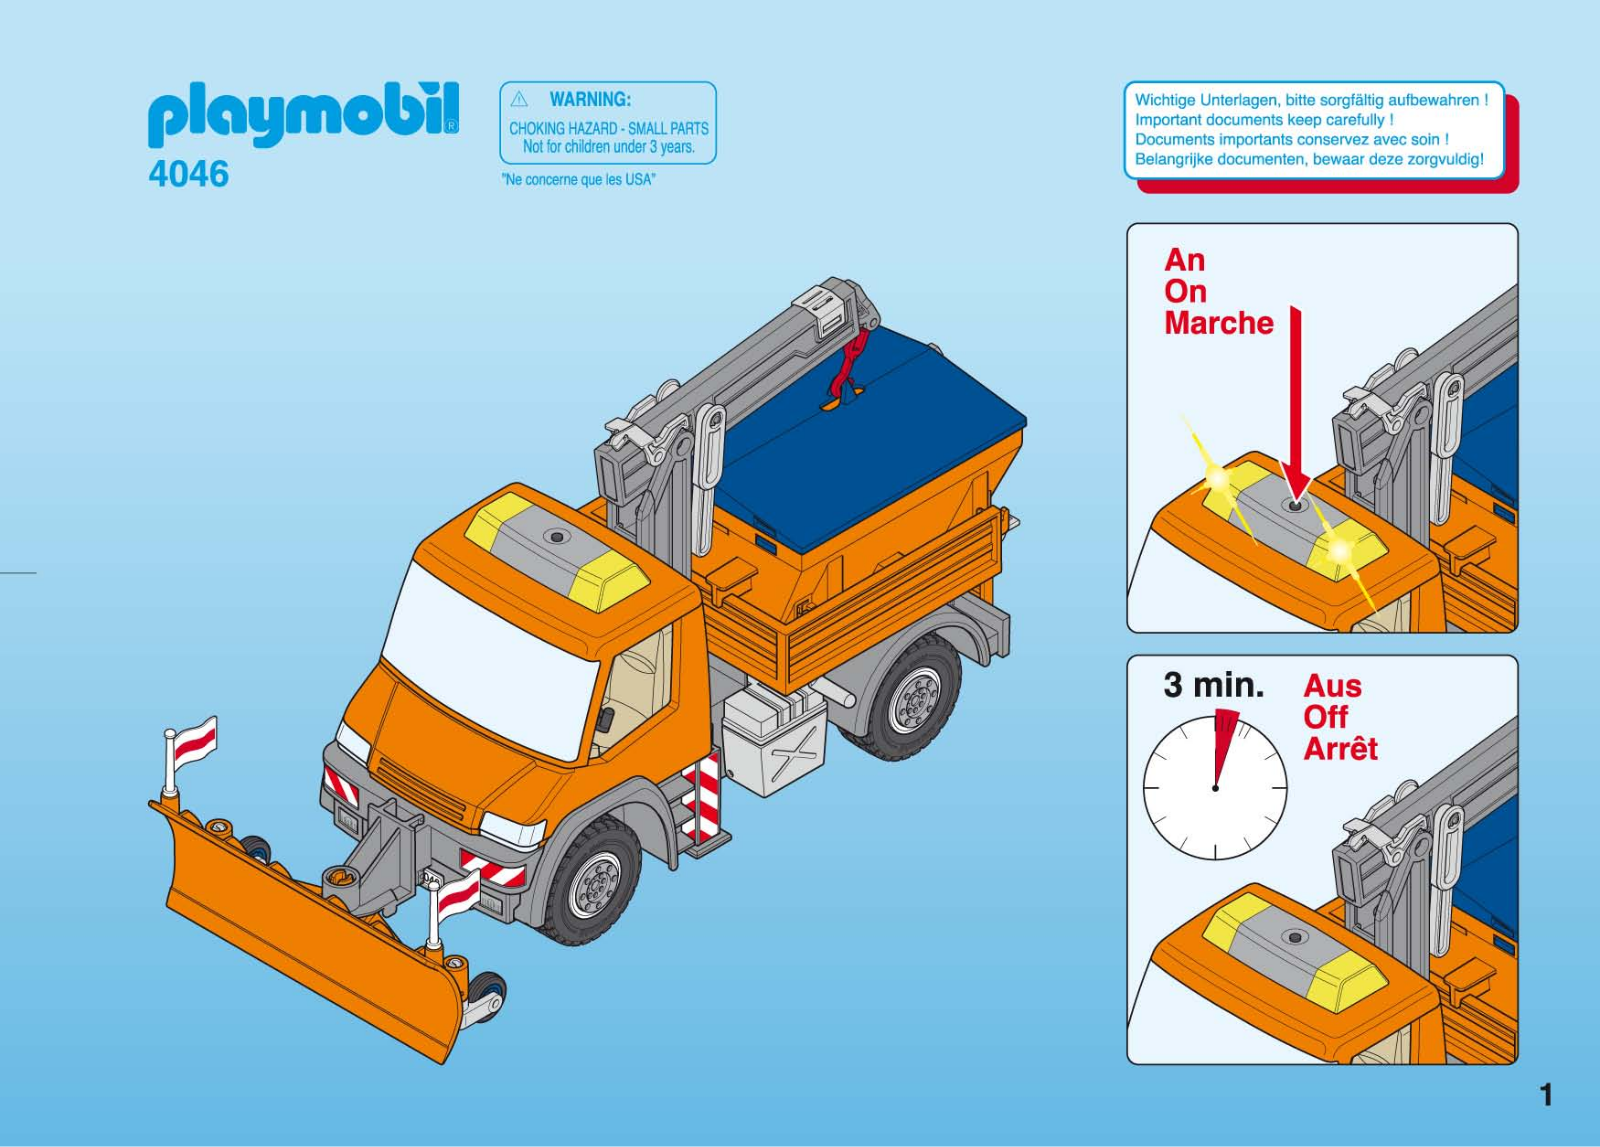 Playmobil 4046 Instructions